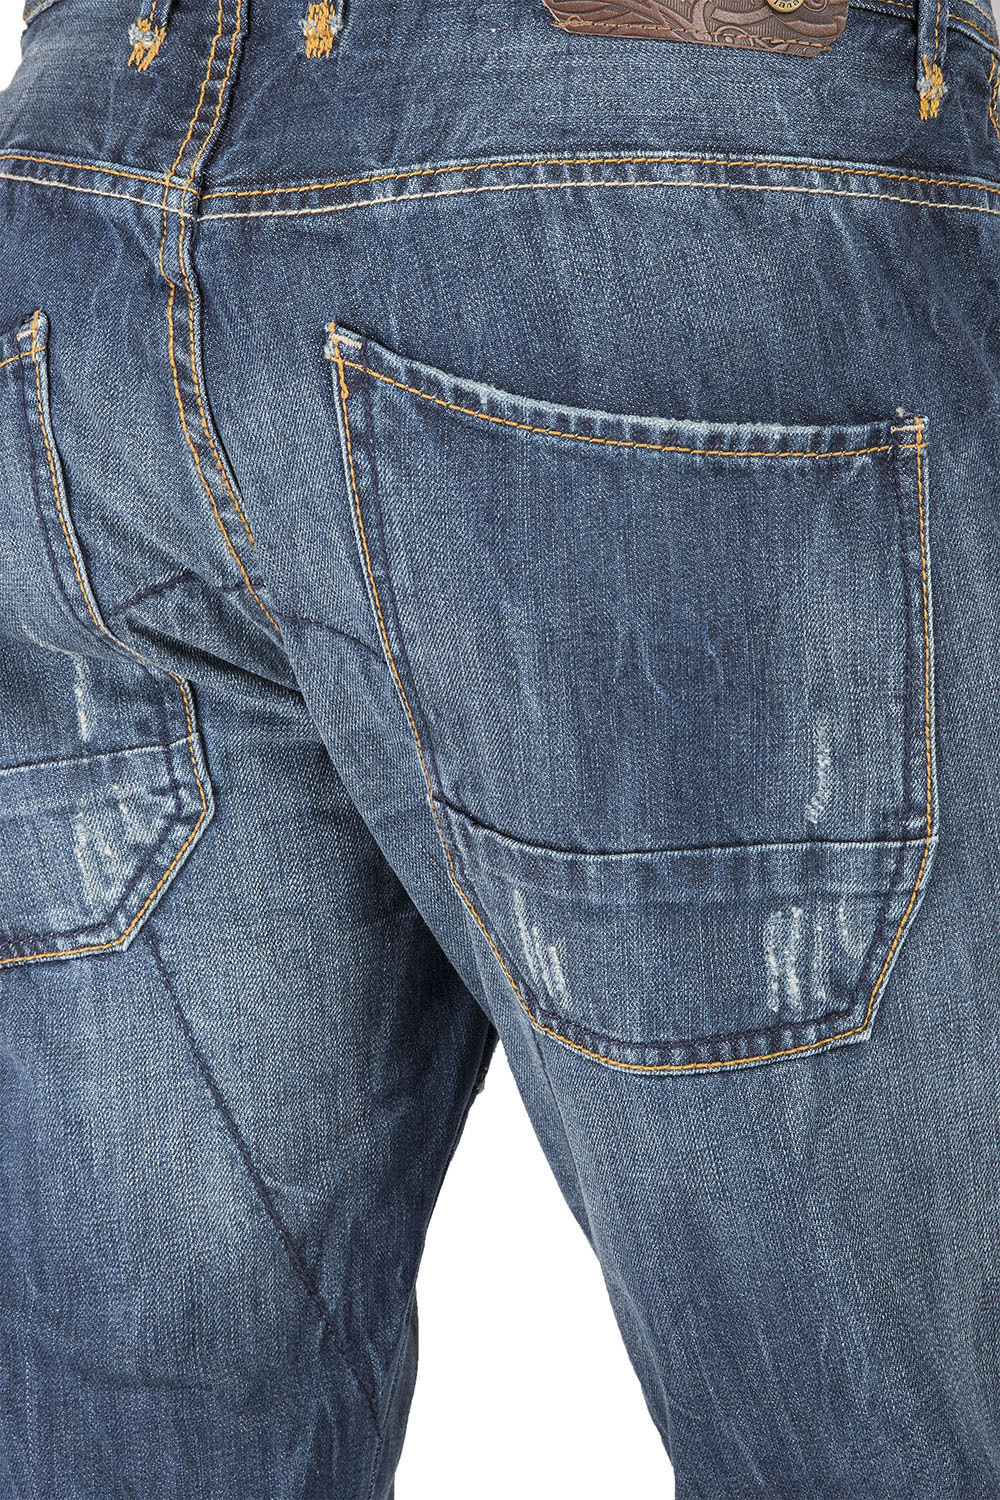 Slim Straight Vintage Hand Sanding Premium Denim 5 Pocket Jeans Ripped & Repaired